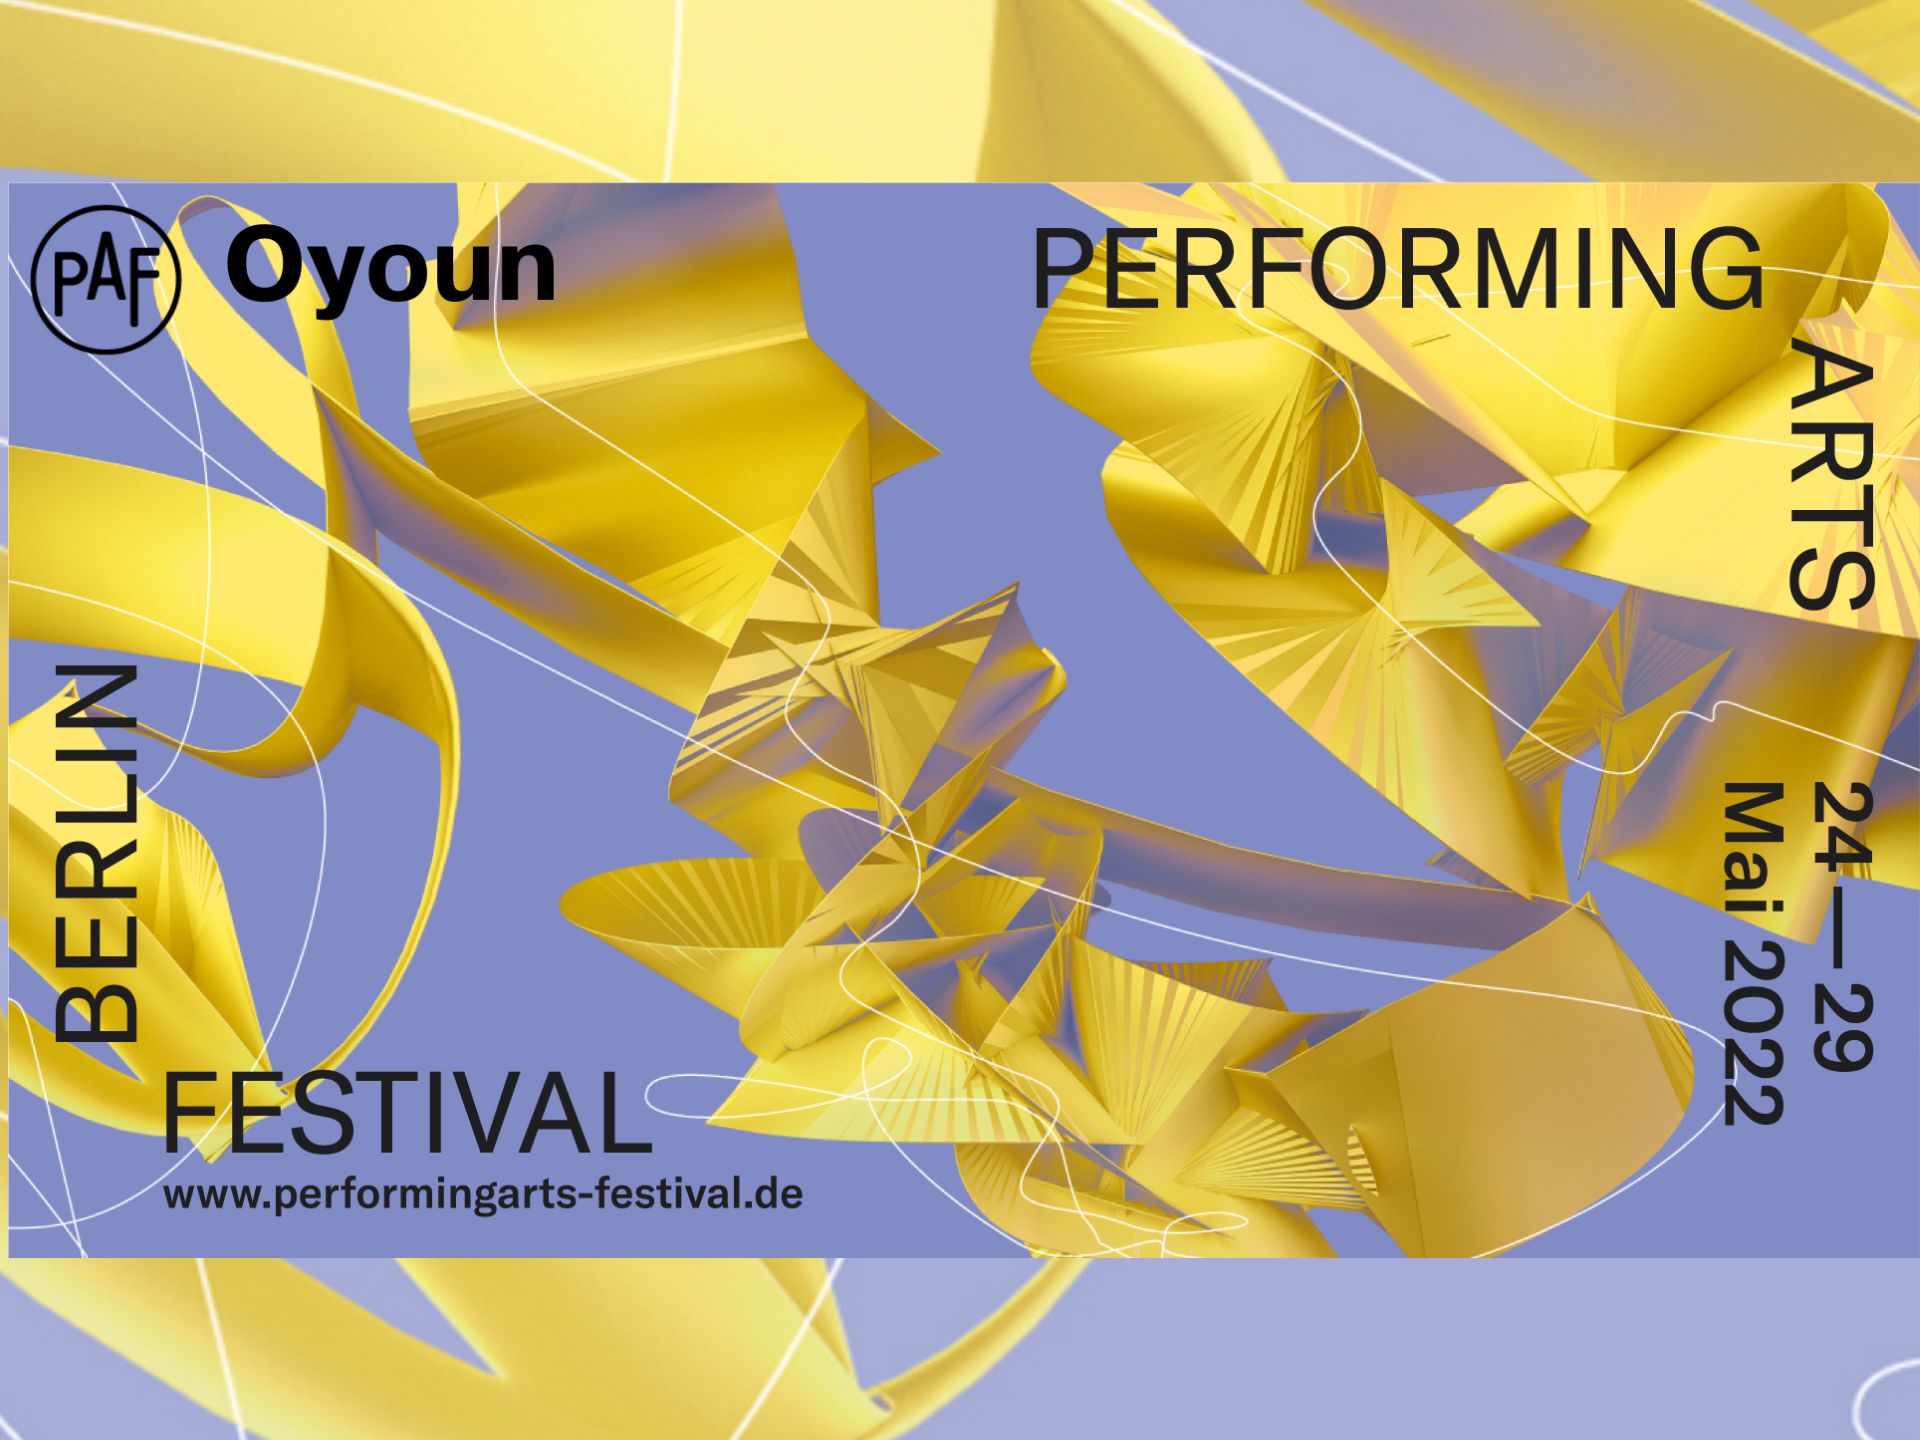 PERFORMING ARTS FESTIVAL | Festival center in Oyoun